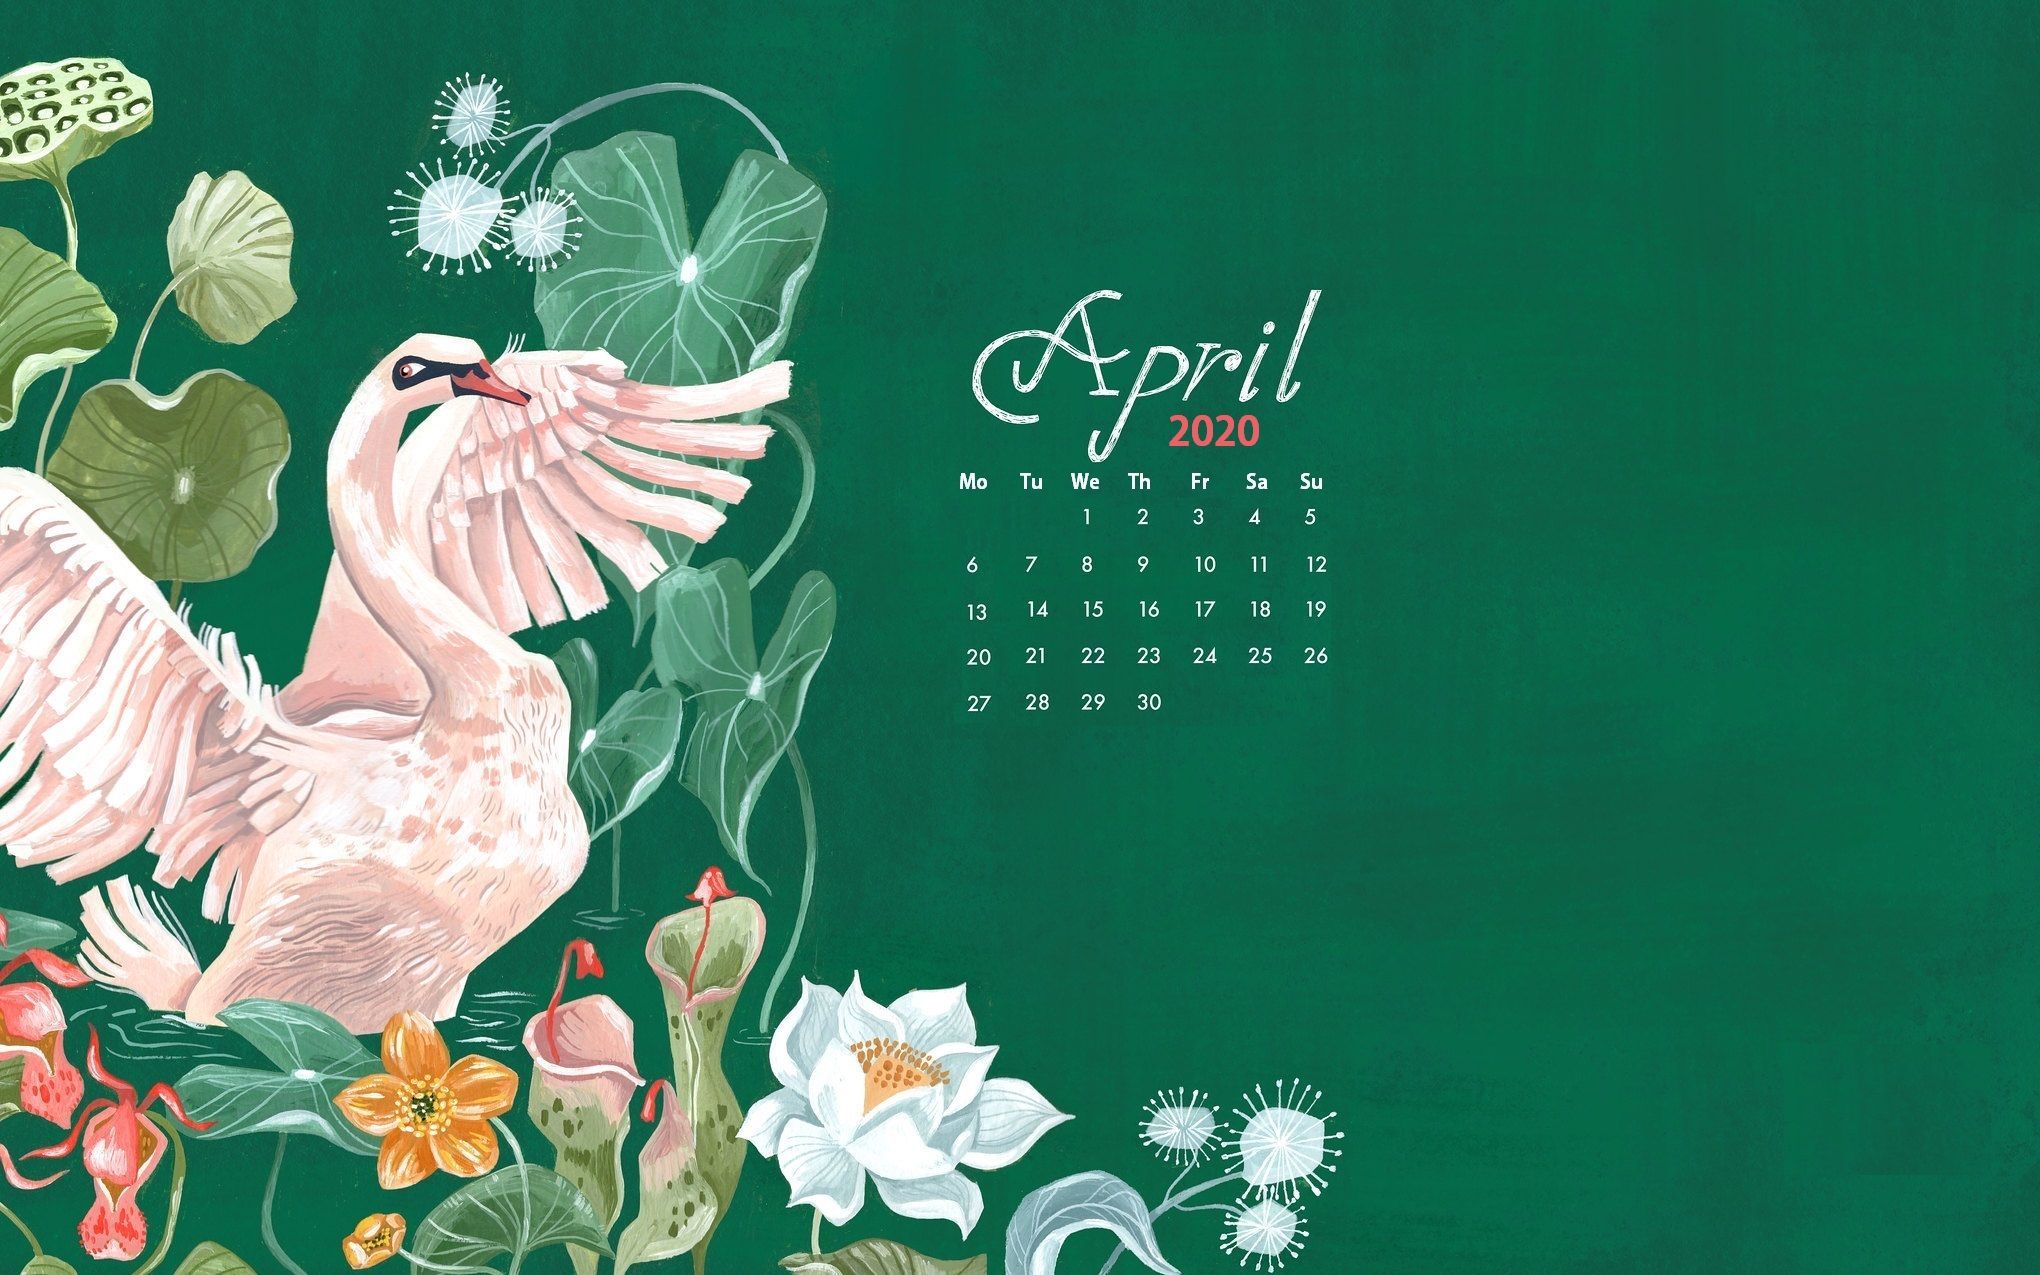 Cute April 2020 Wallpaper Calendar | Calendar wallpaper, Desktop